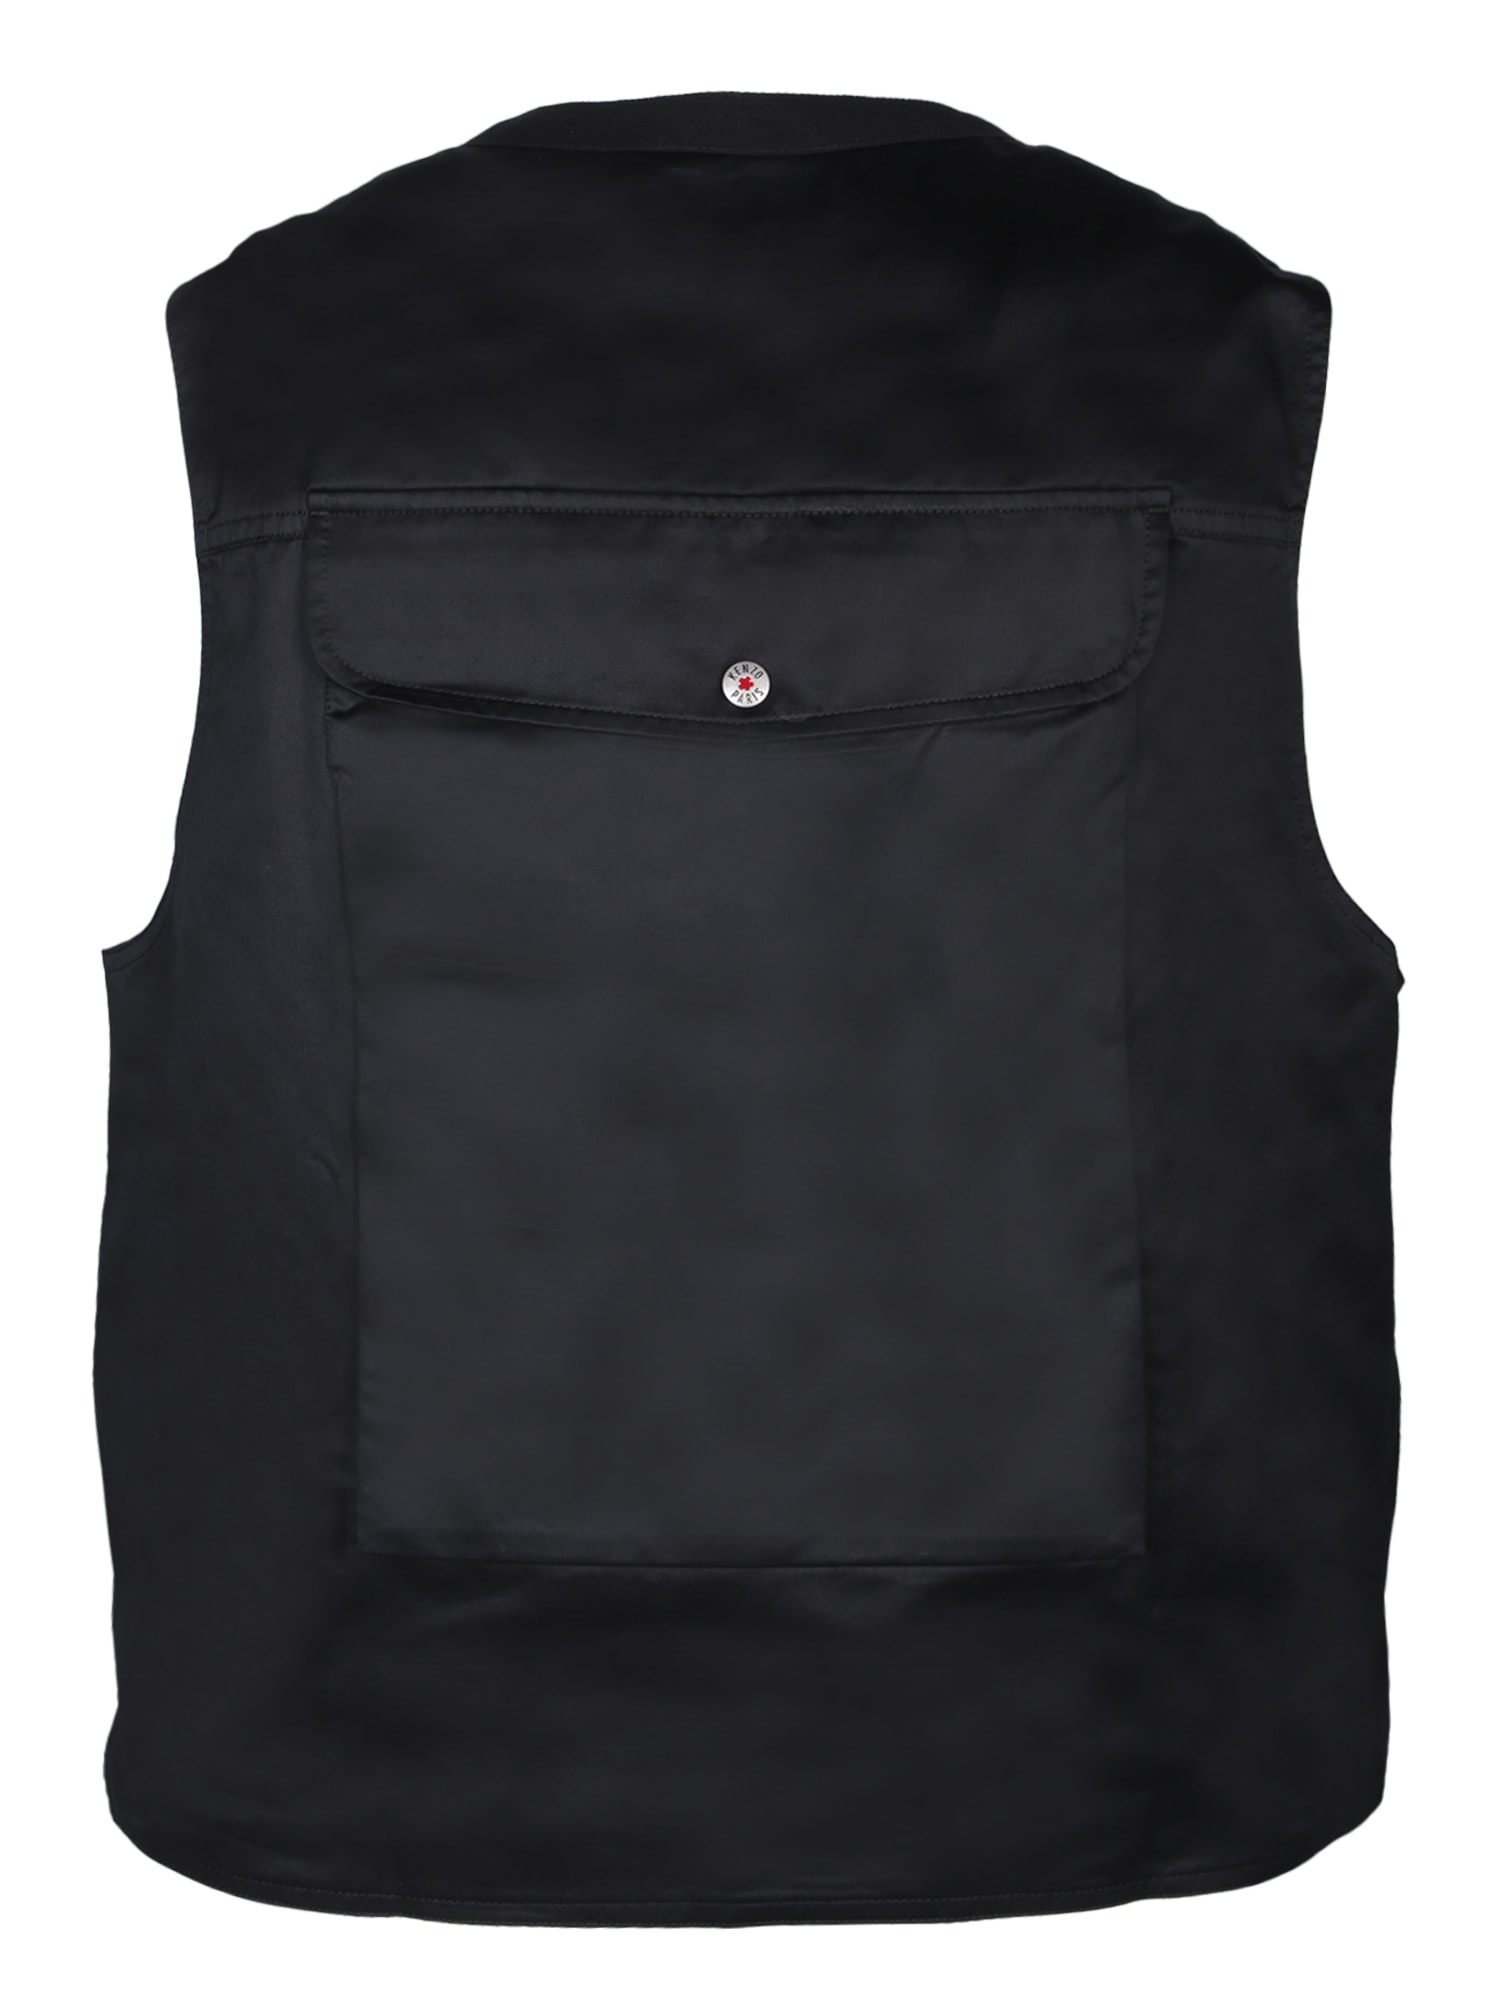 Shop Kenzo Black Tactical Vest